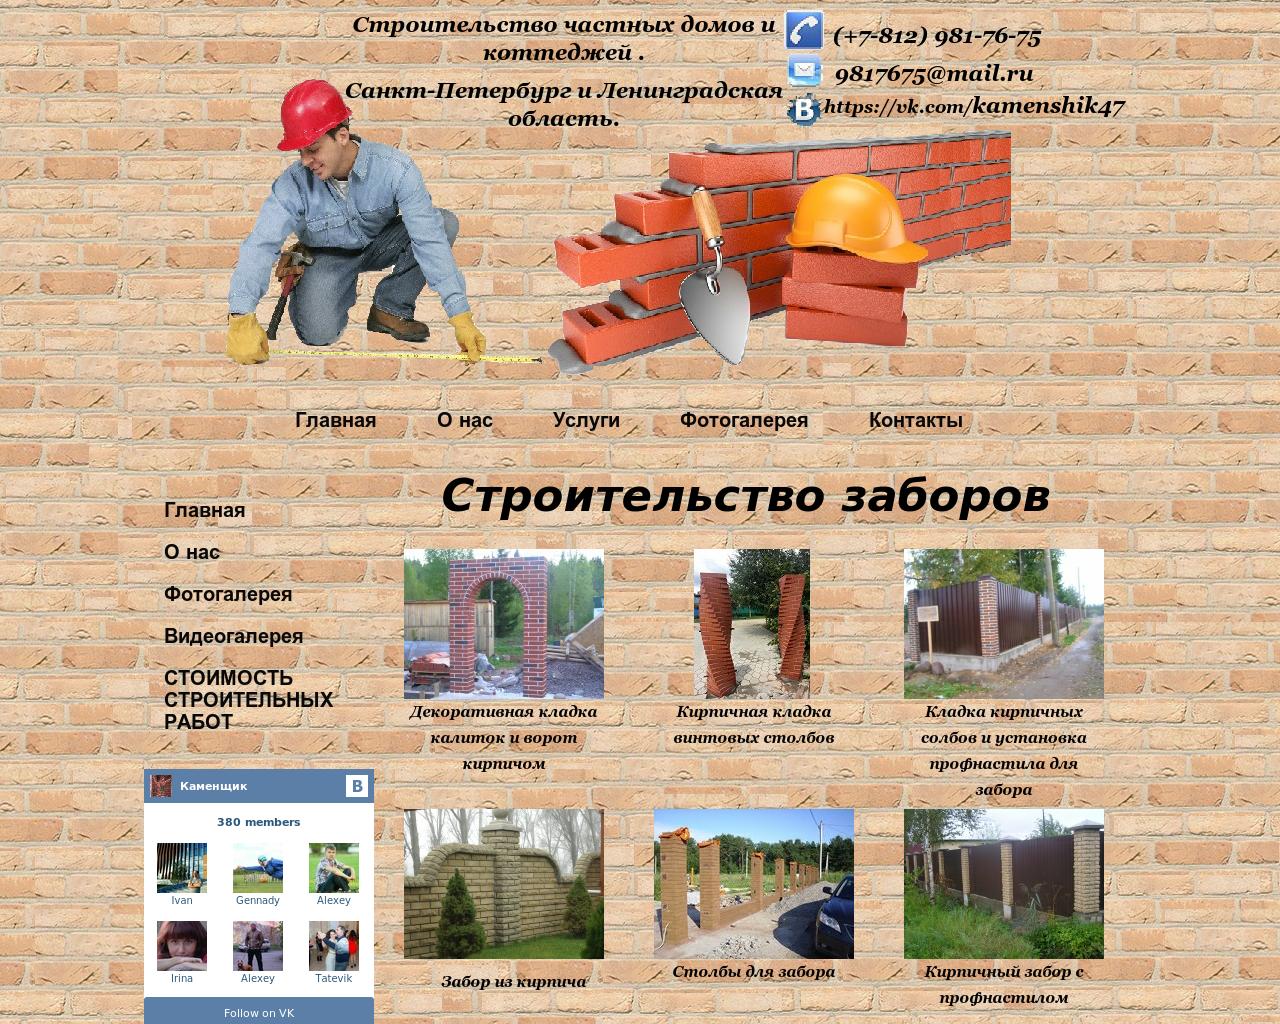 Изображение сайта строители24.рф в разрешении 1280x1024